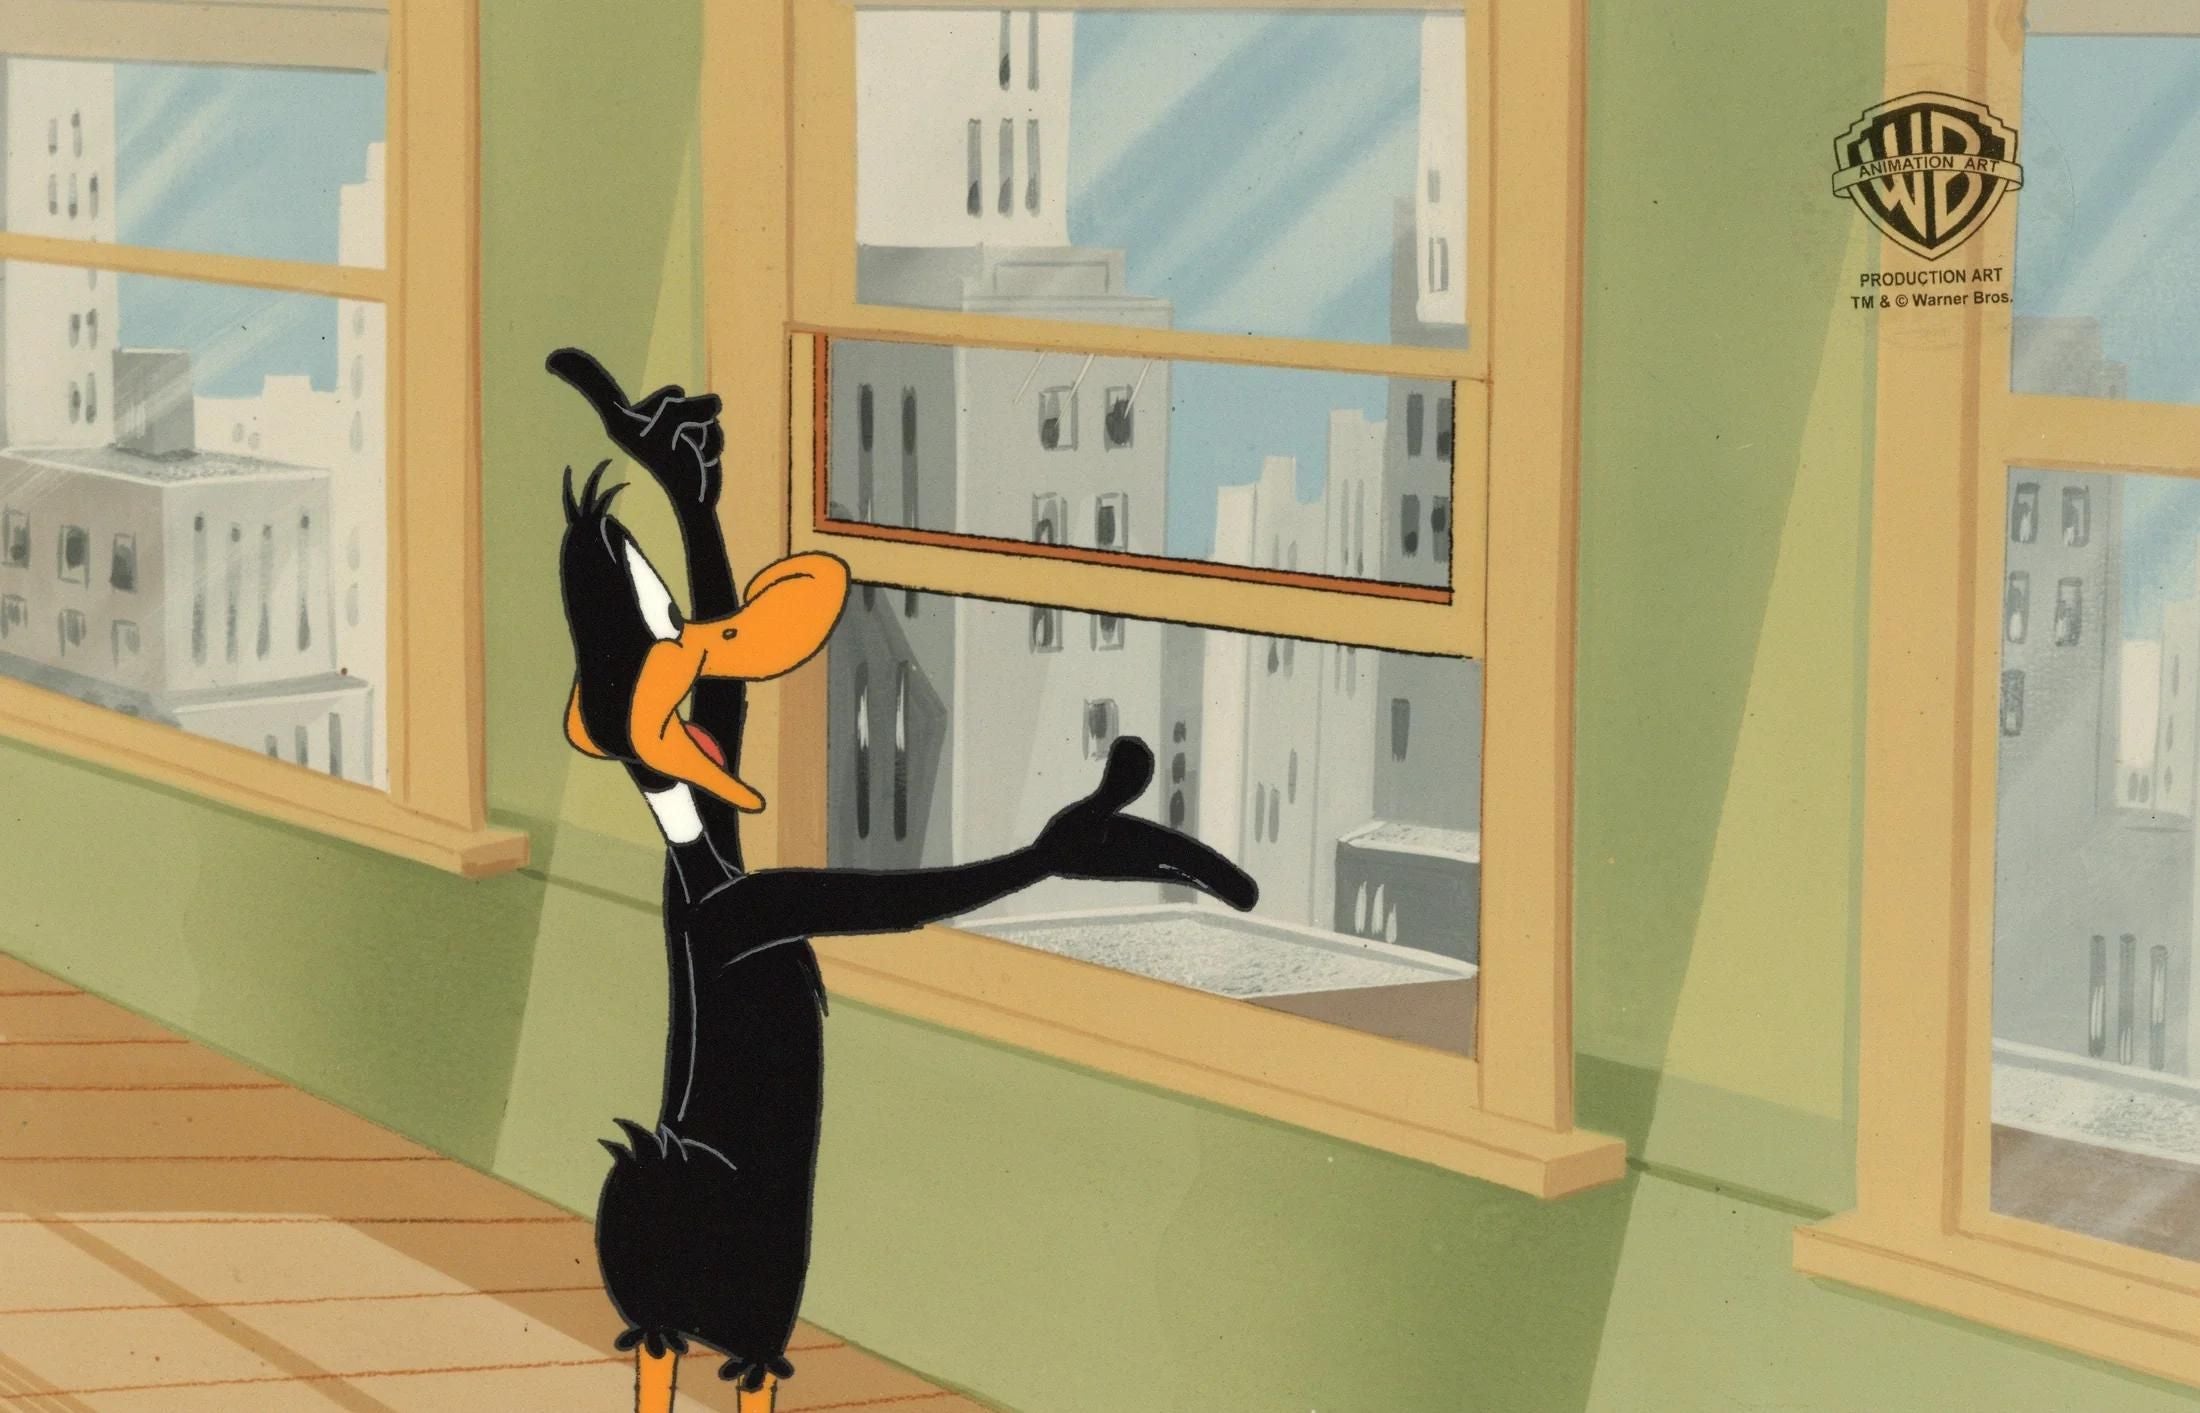 Daffy Duck singing in front of an open window